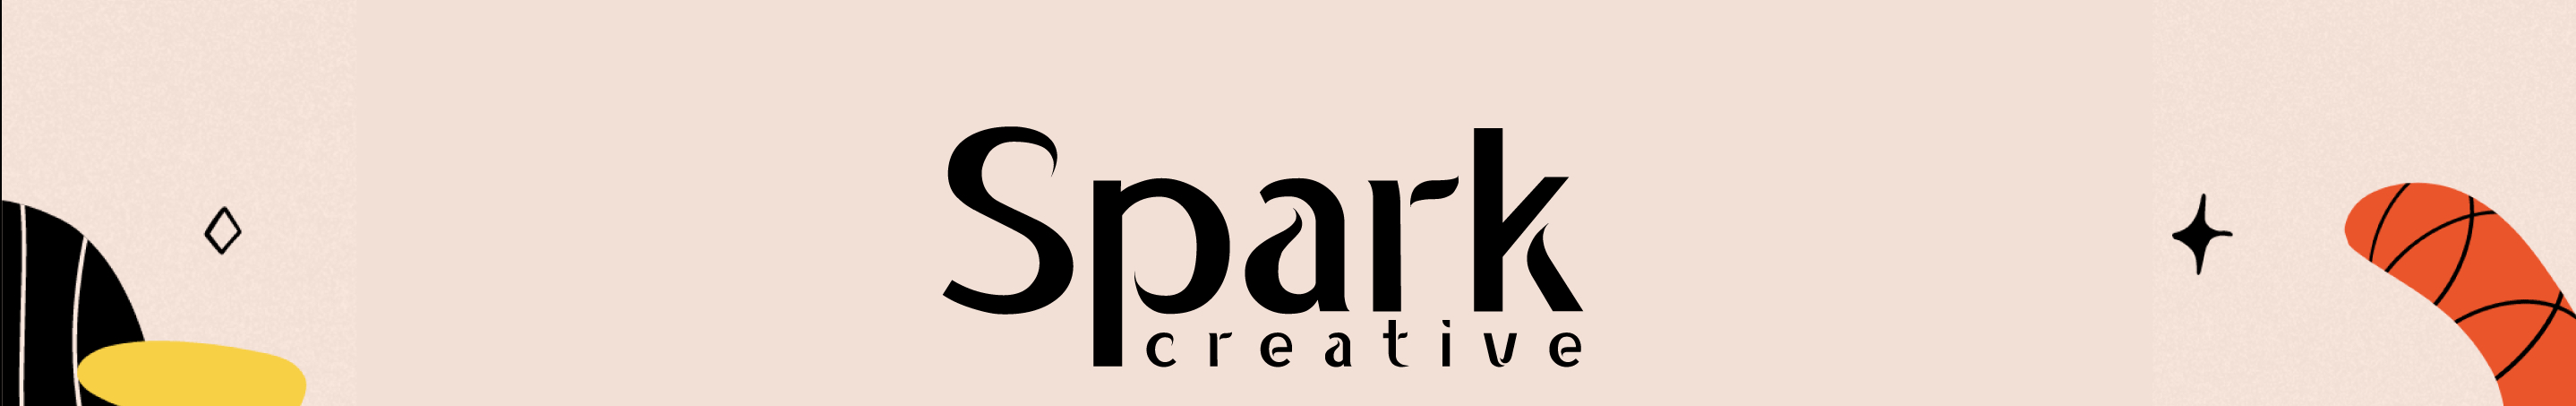 Spark Creative's profile banner